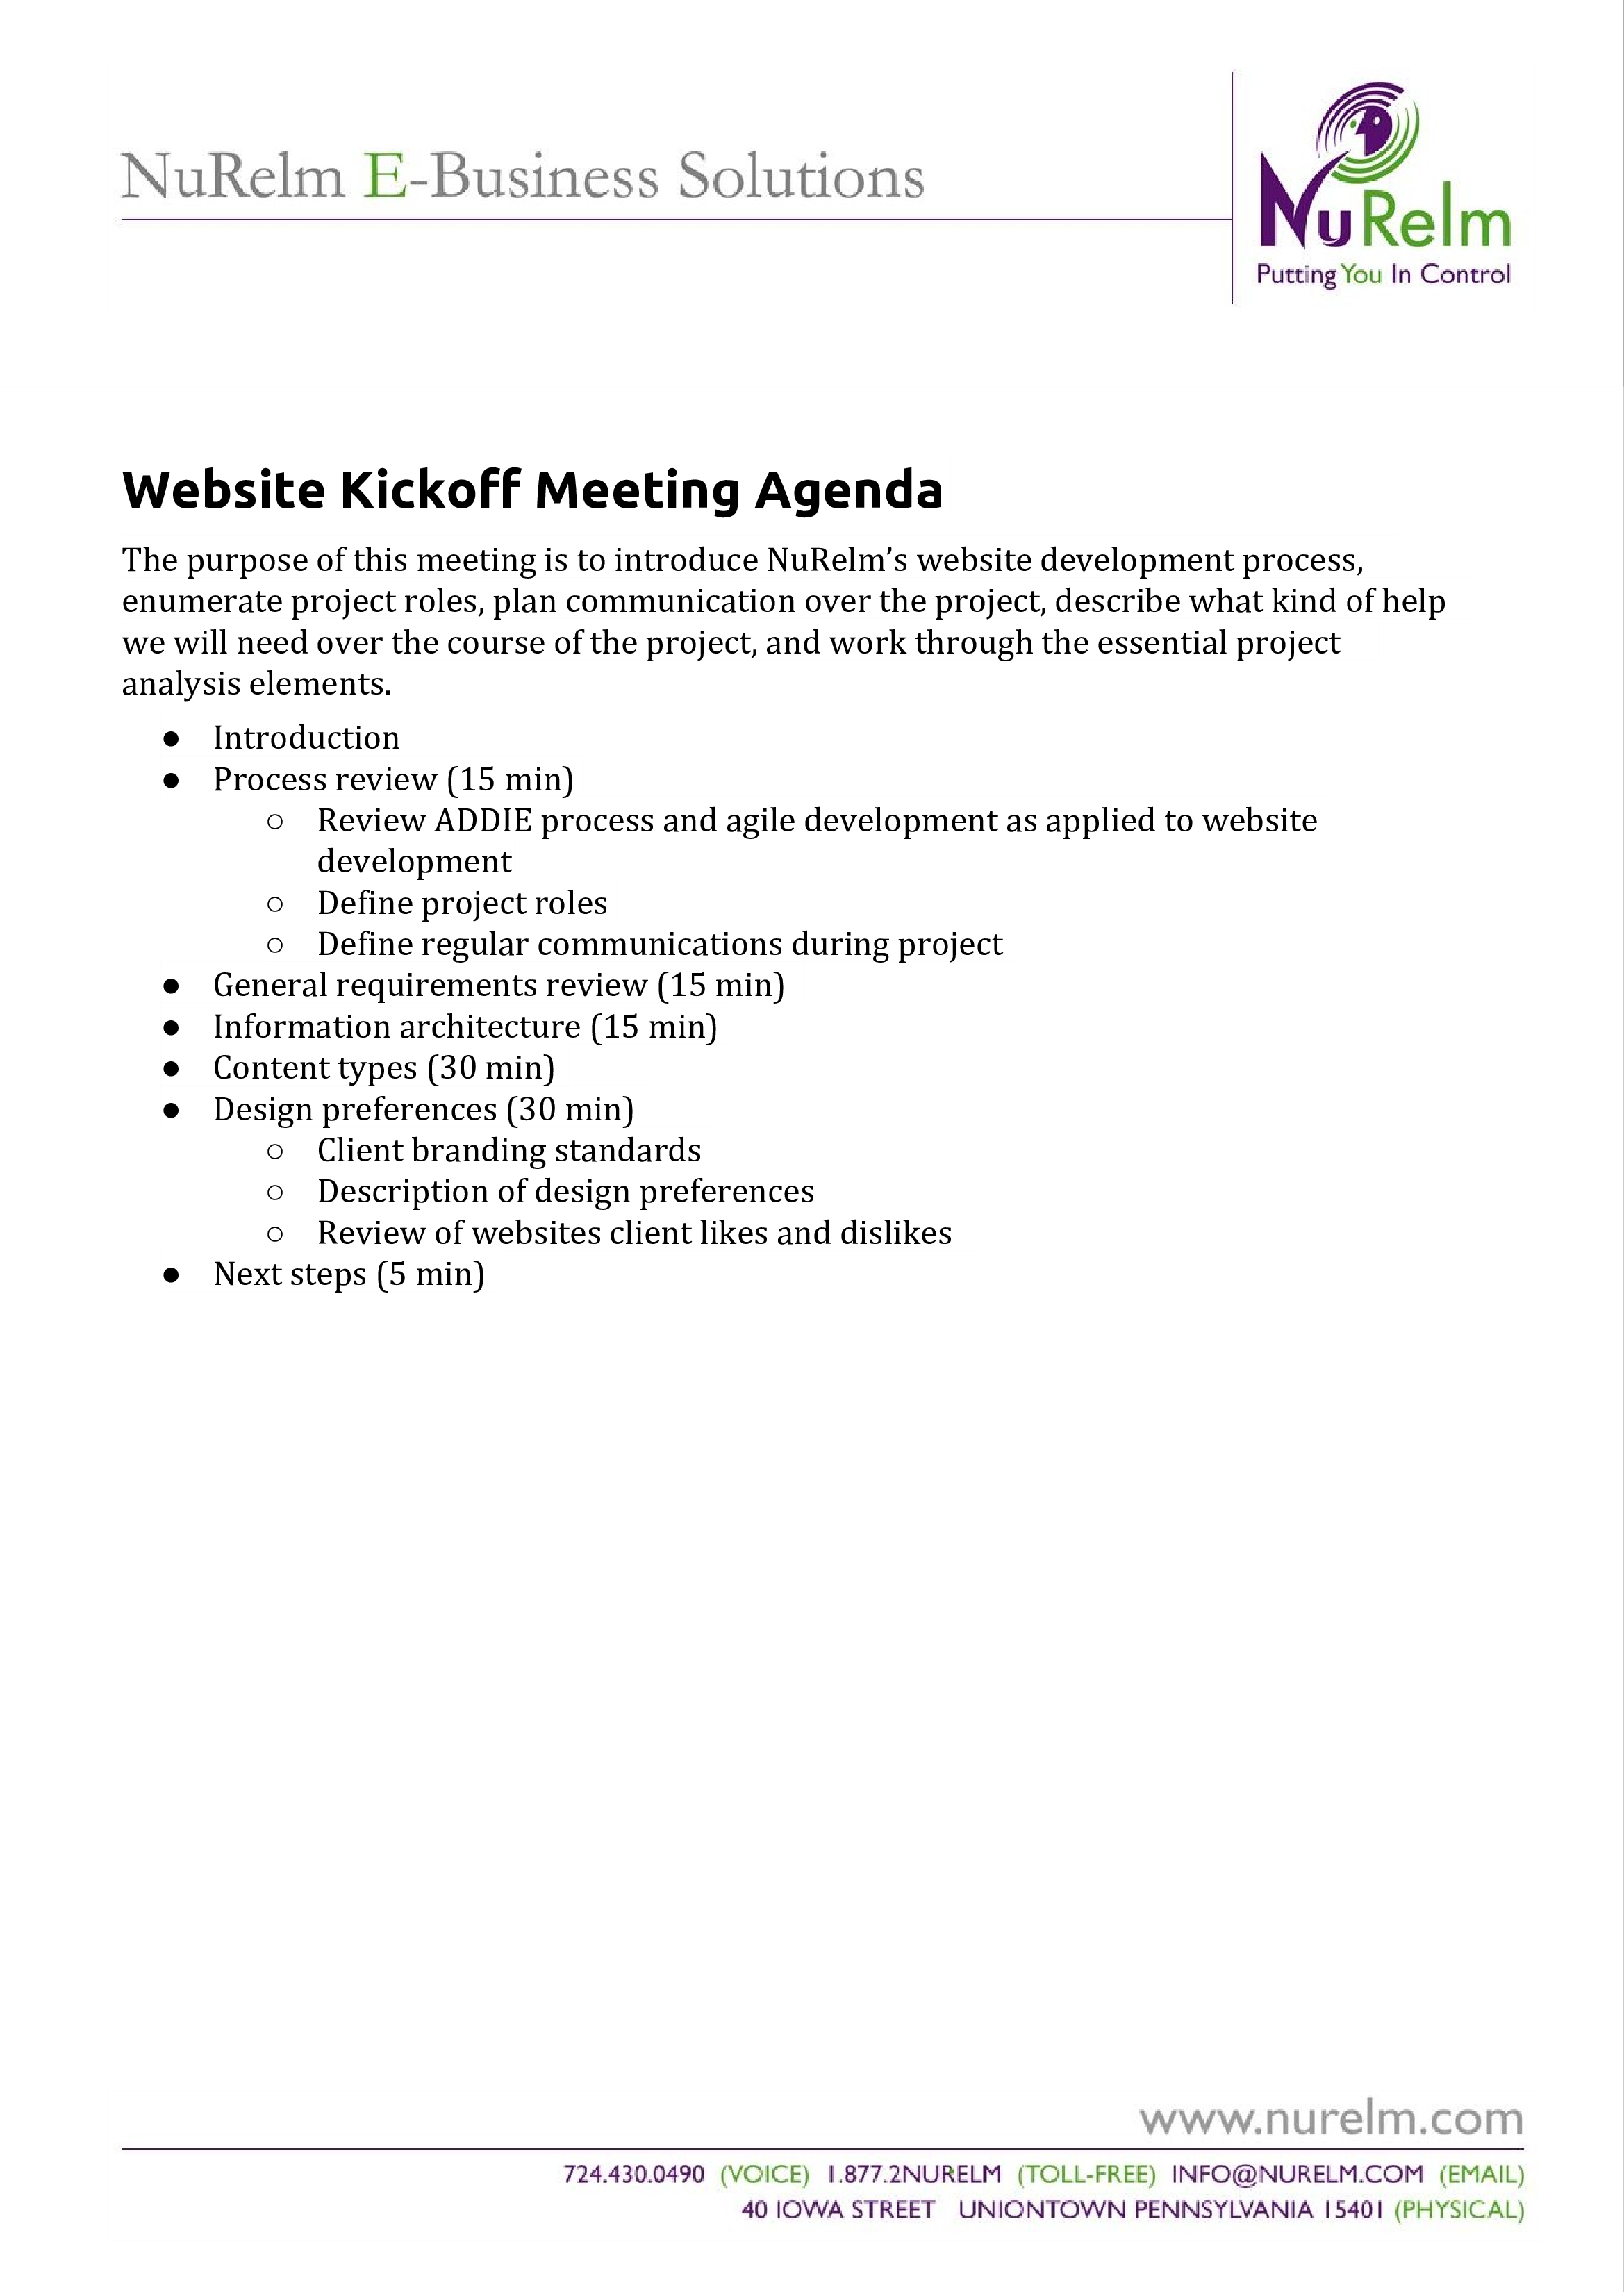 Website Kickoff Meeting Agenda main image